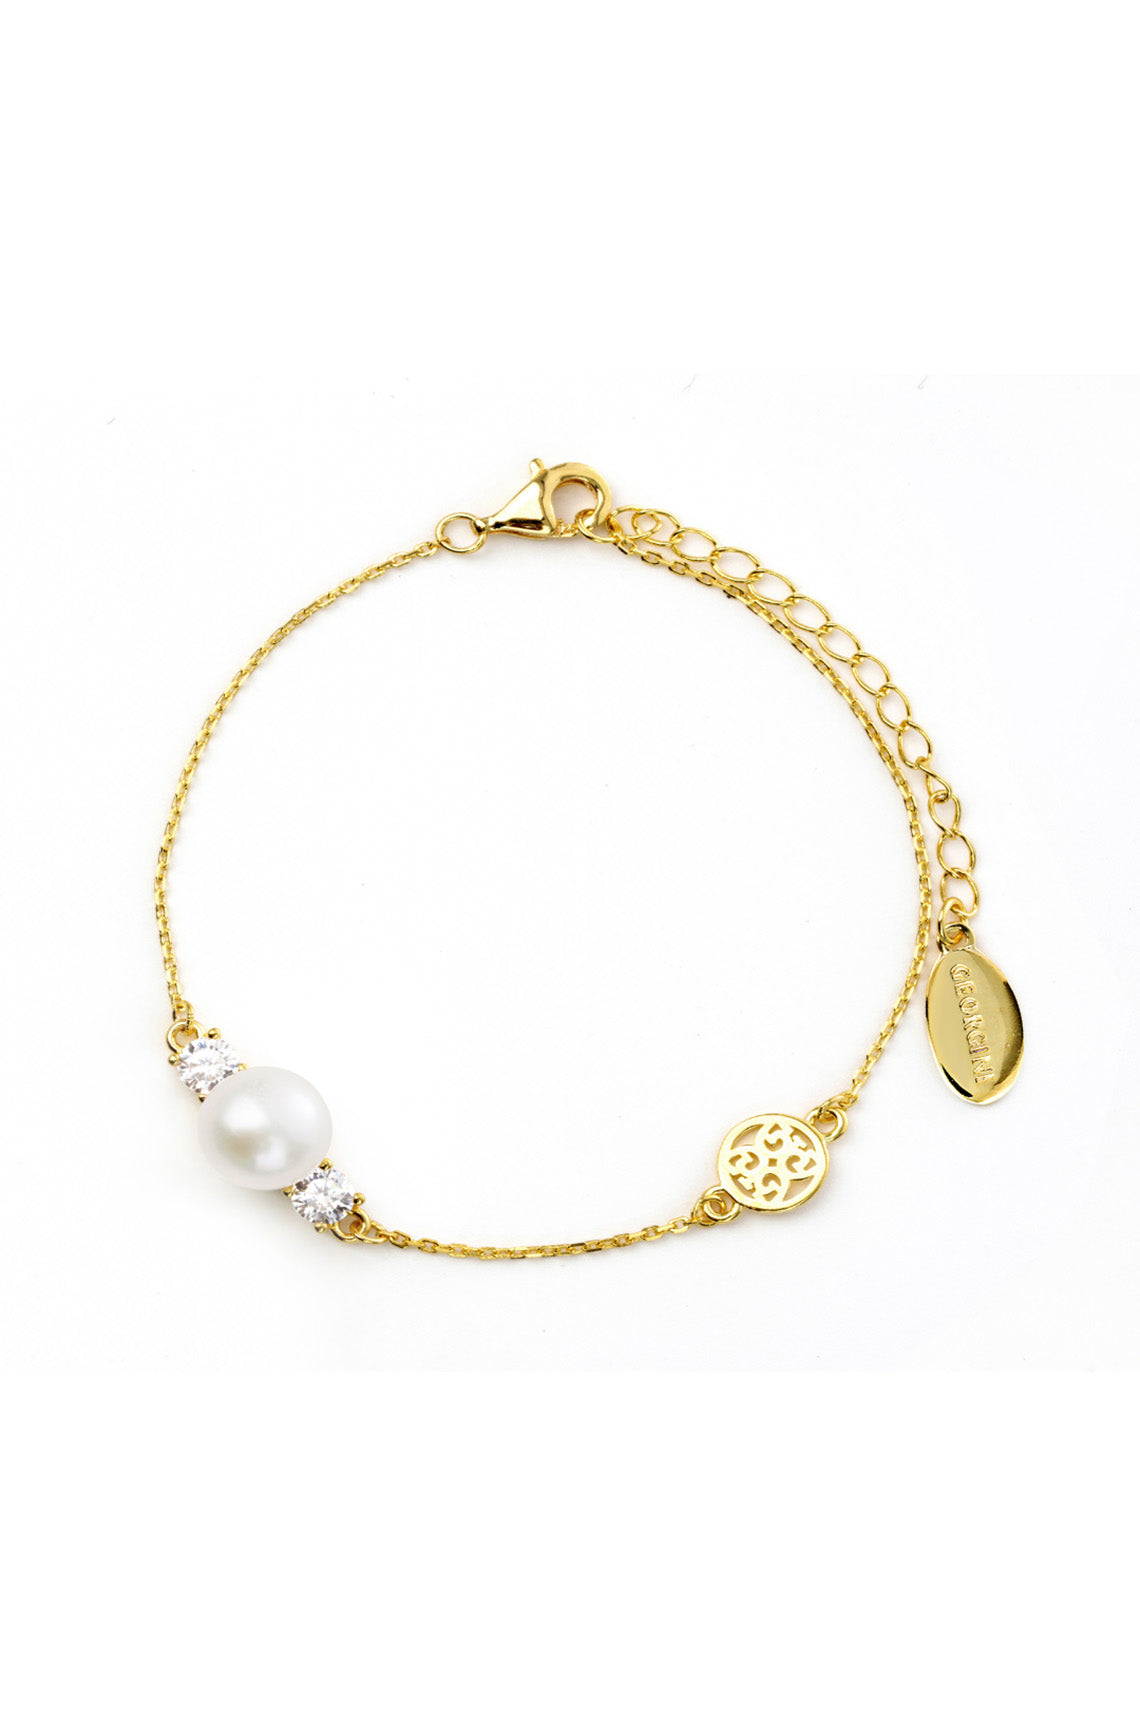 Elsa Peretti™ Pearls by the Yard™ bracelet in 18k gold. | Tiffany & Co.